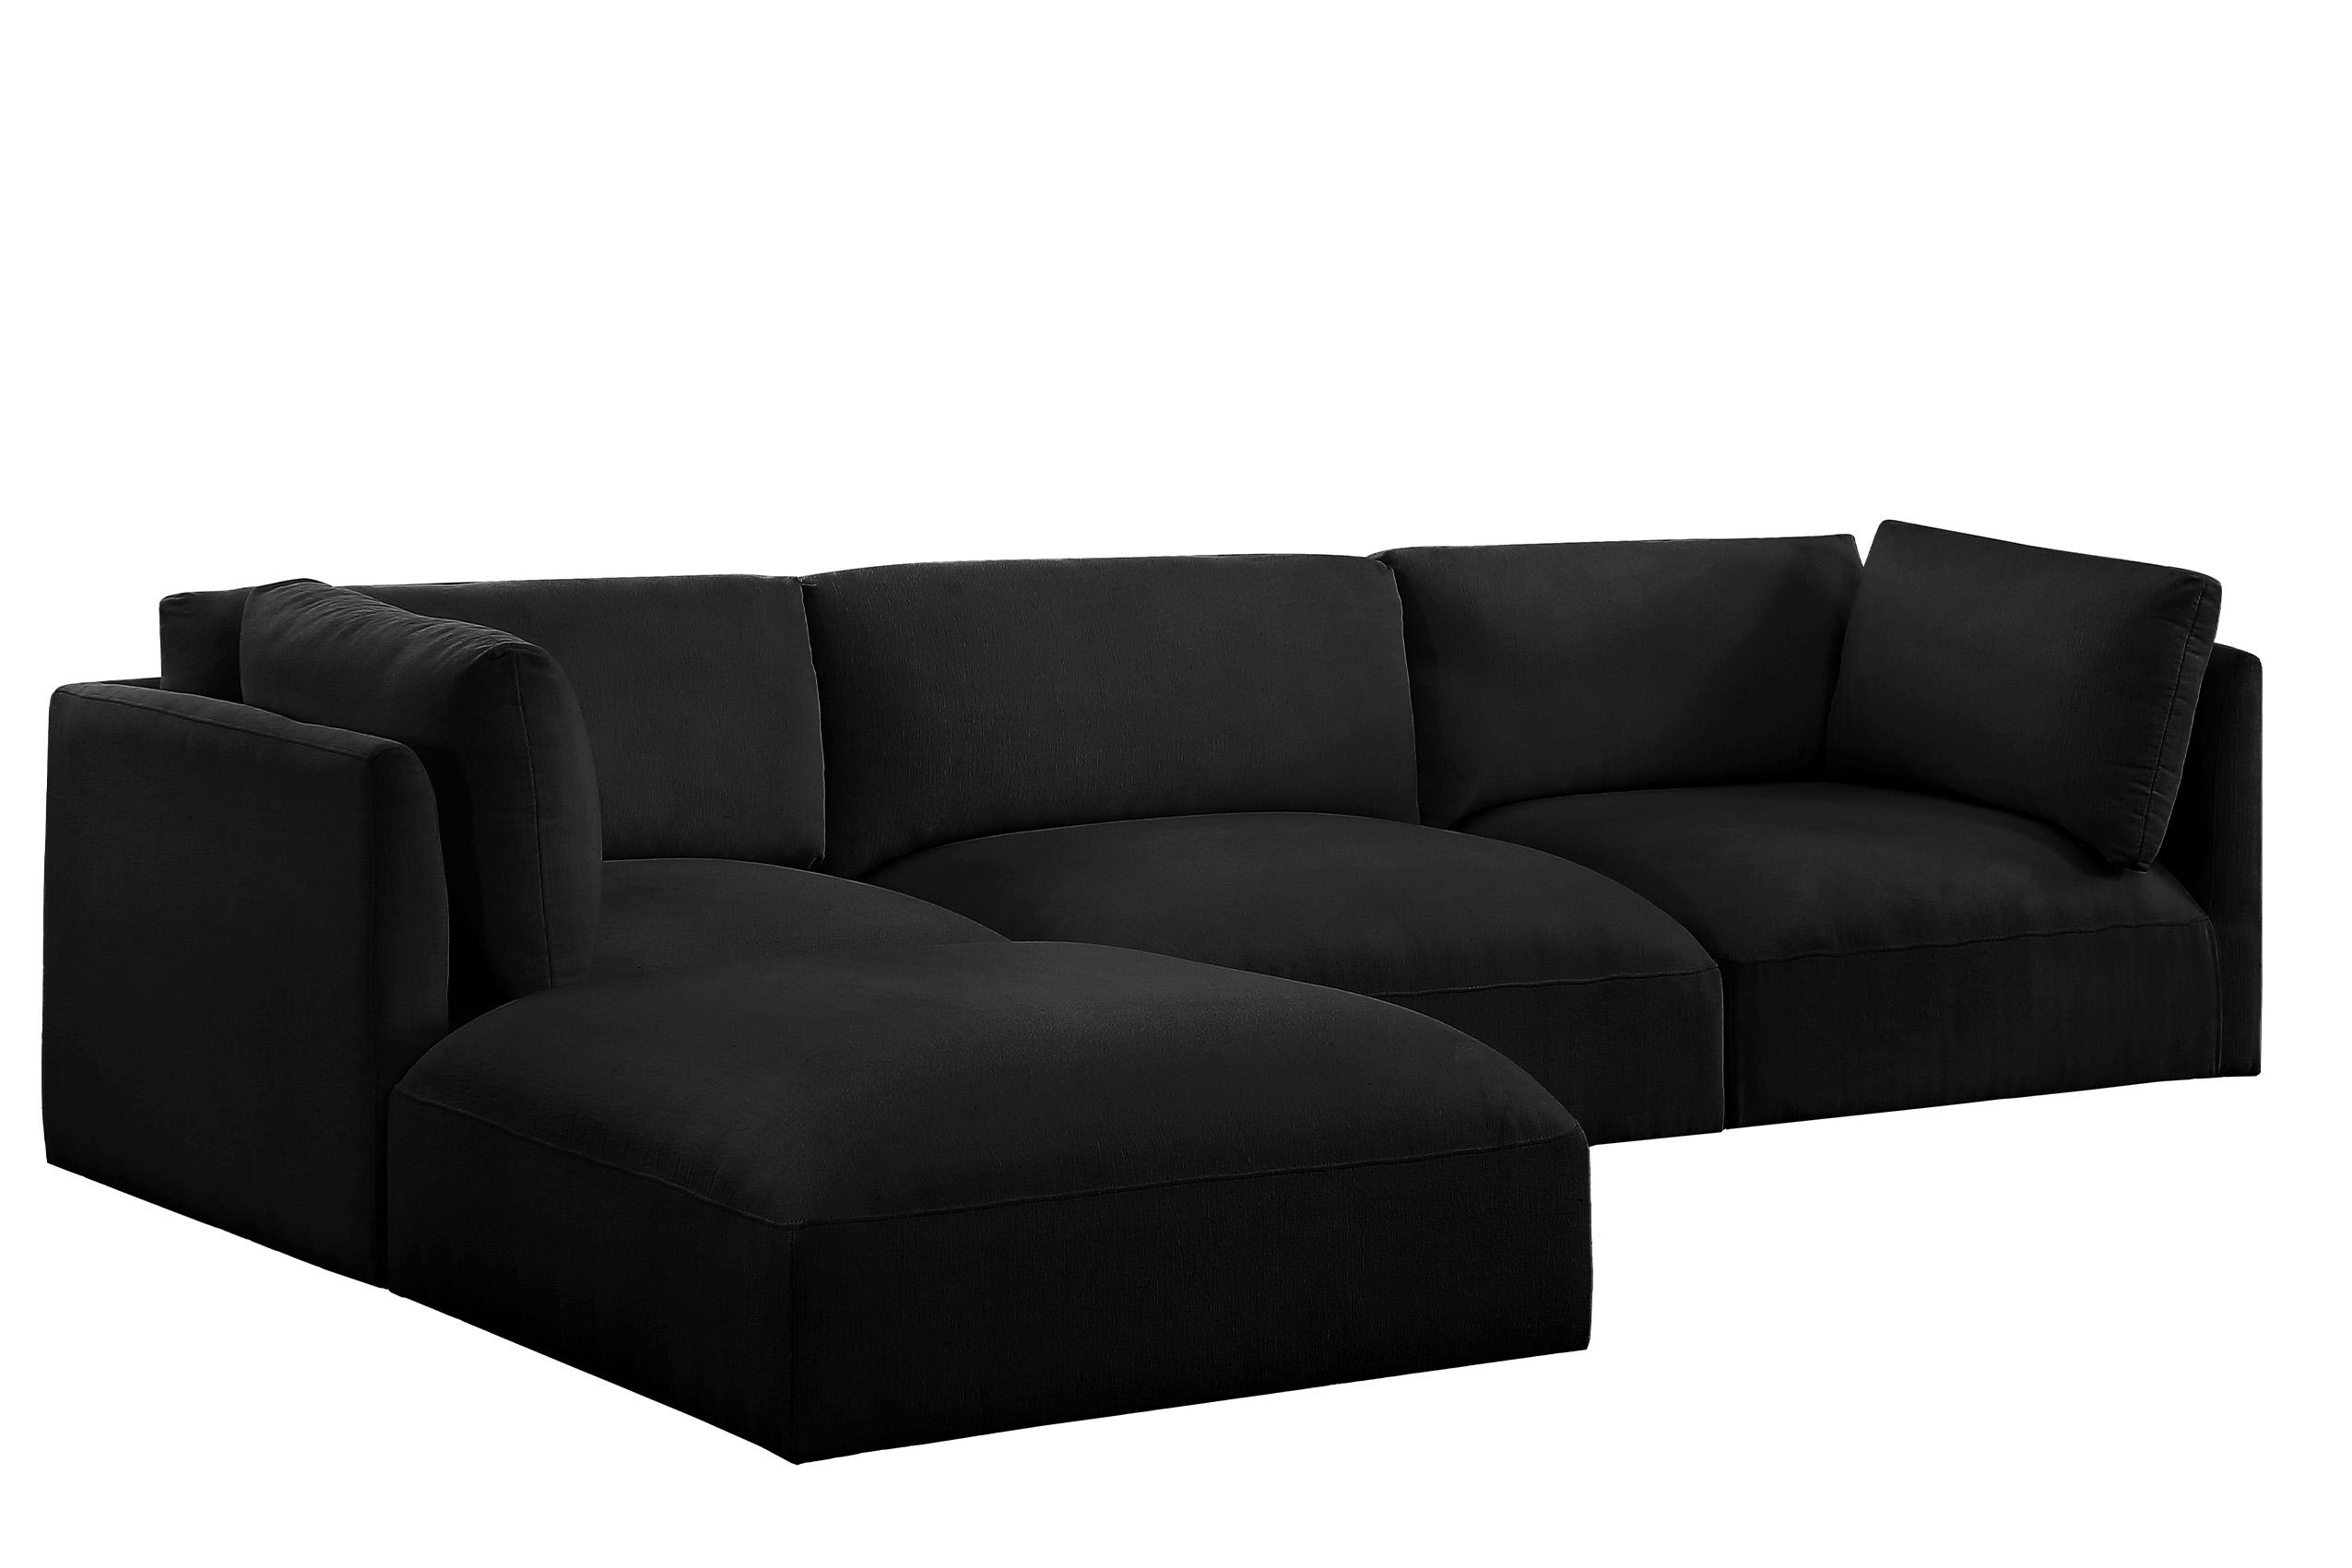 Contemporary, Modern Modular Sectional Sofa EASE 696Black-Sec4A 696Black-Sec4A in Black Fabric